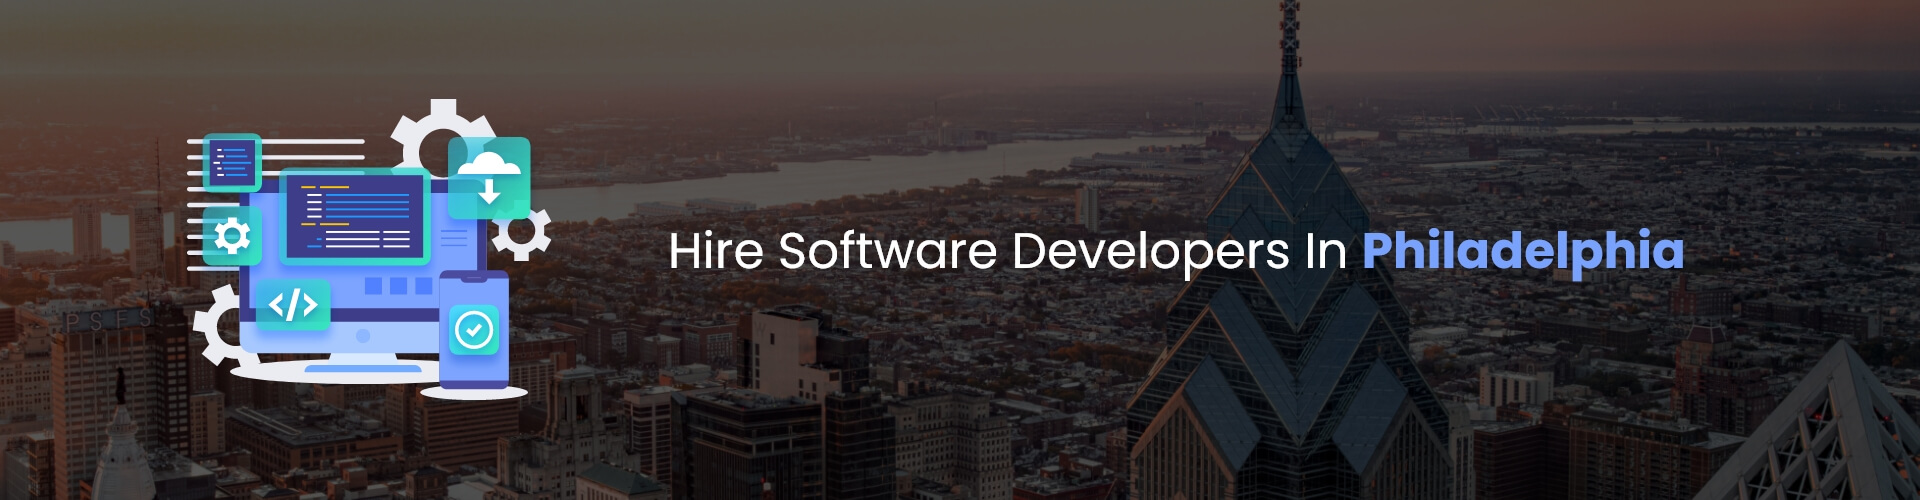 hire software developers in philadelphia